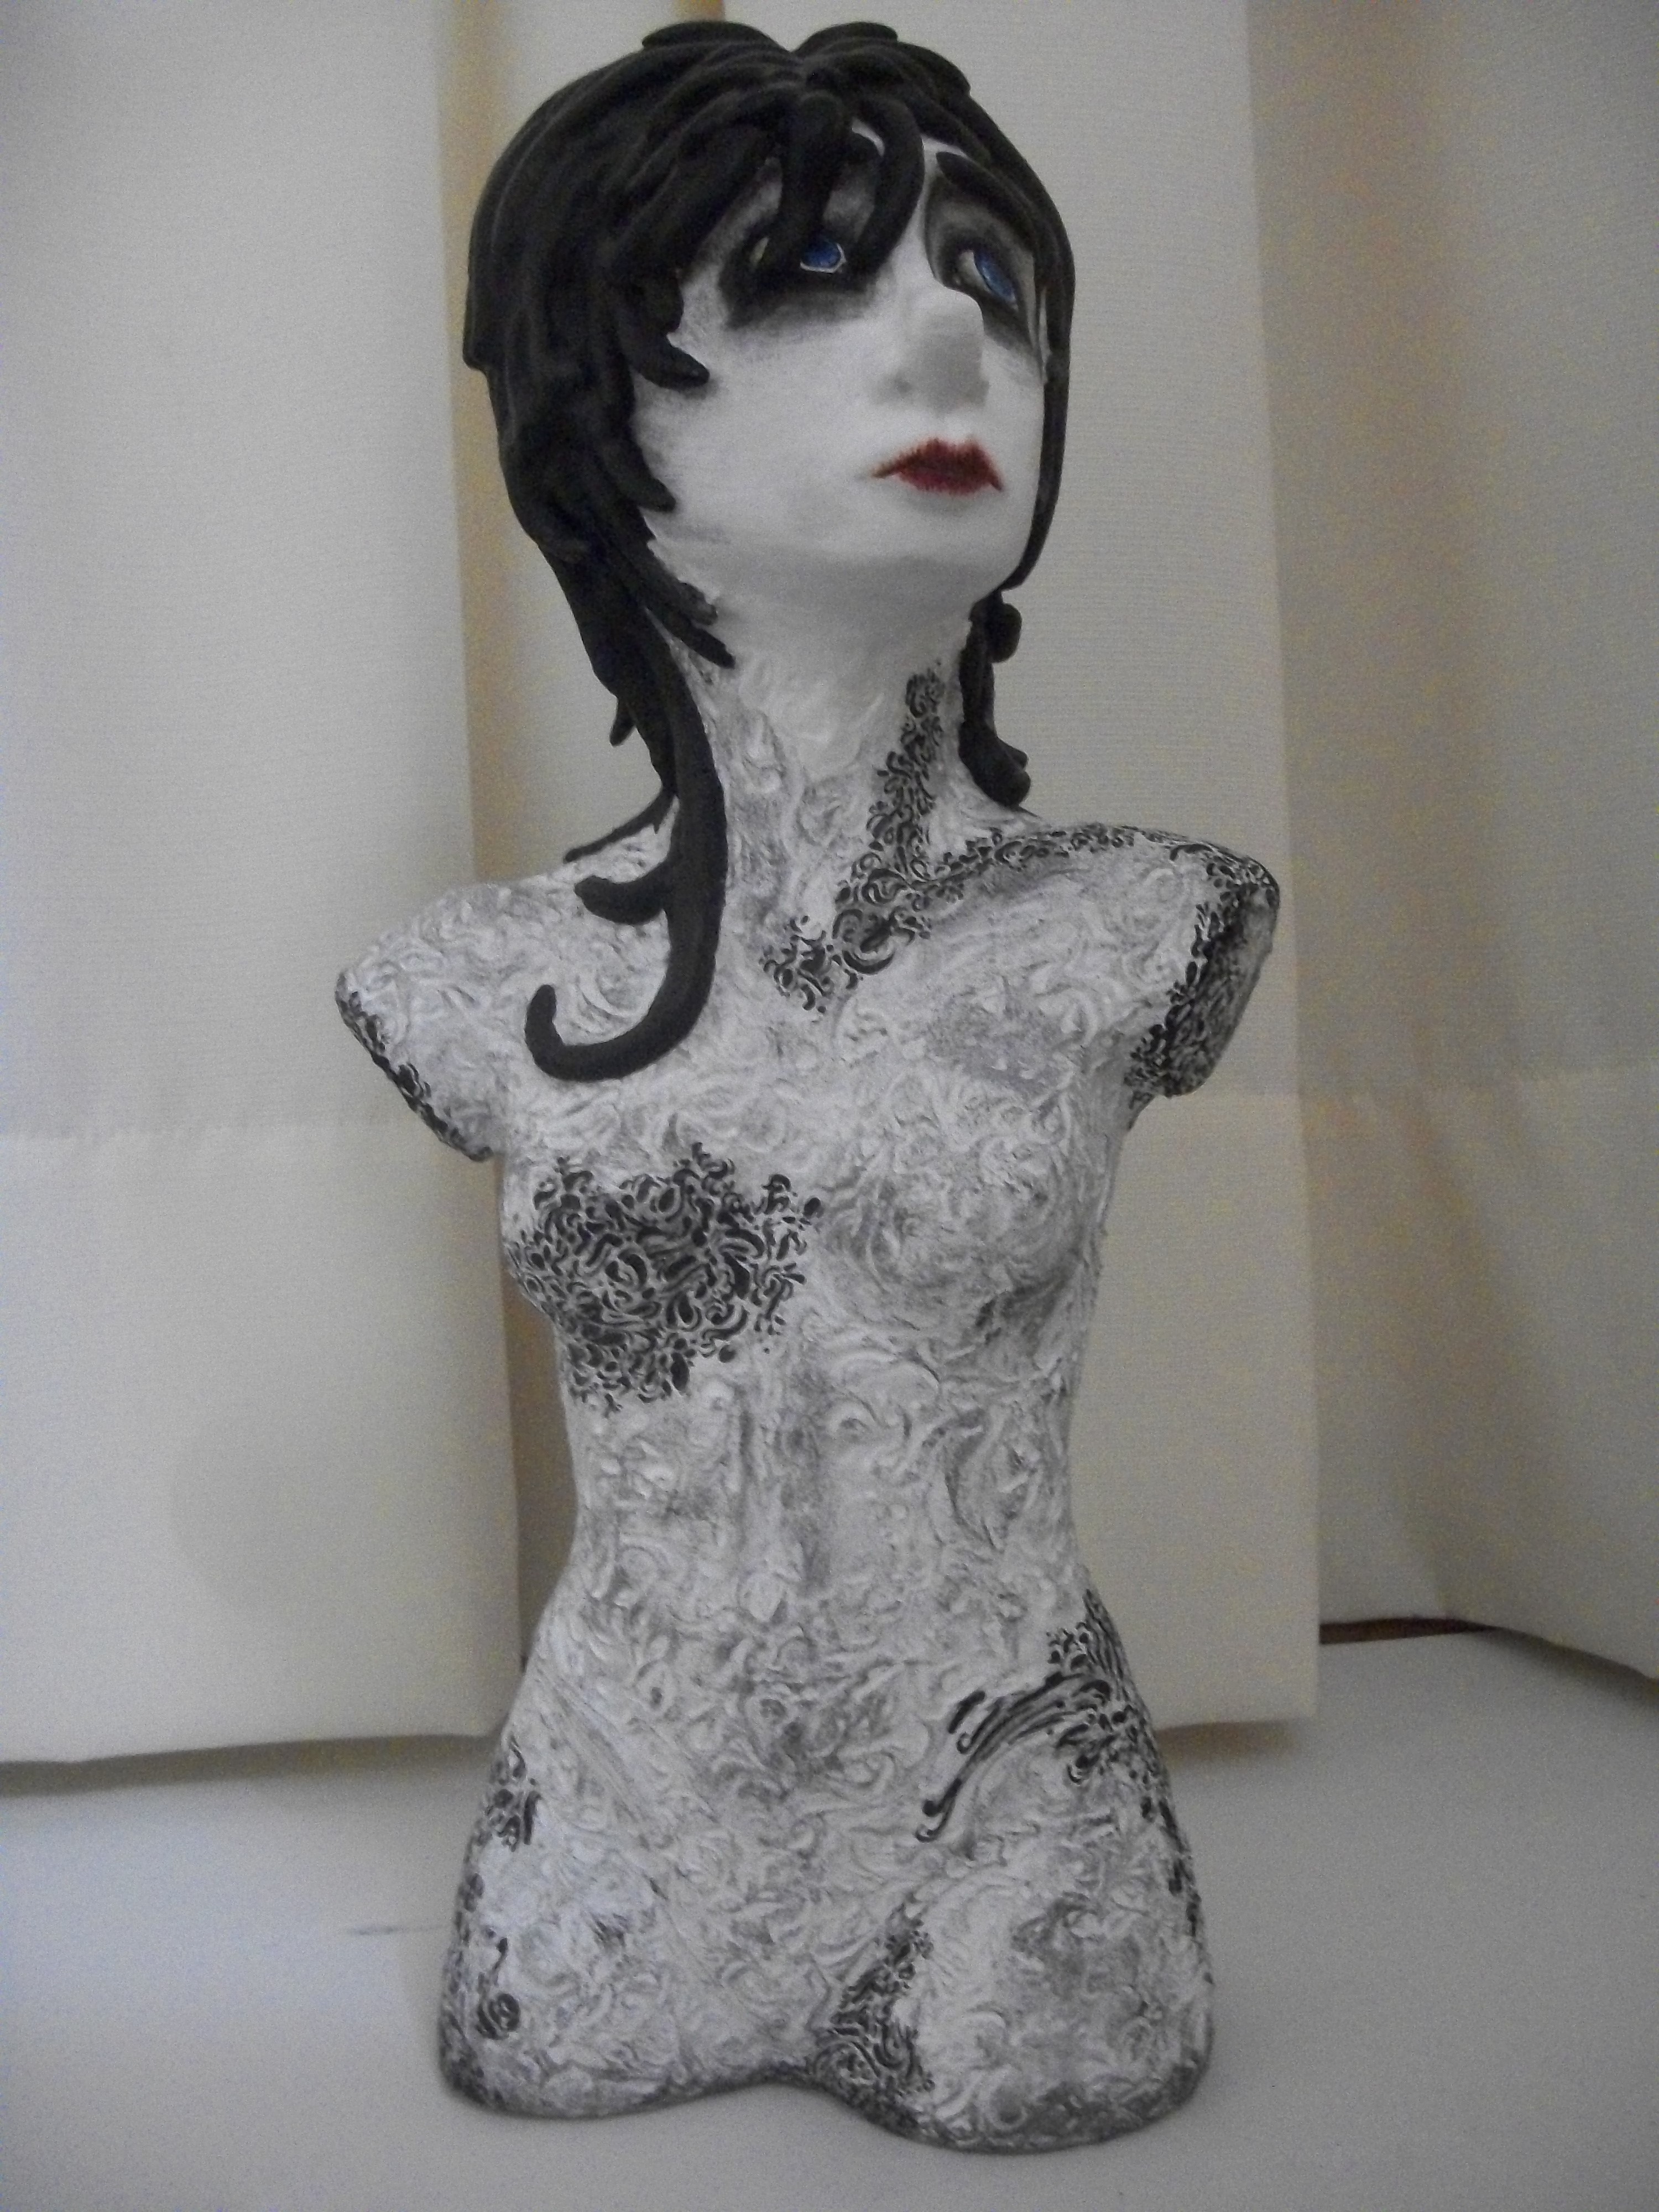 My second Sculpture. (2011)